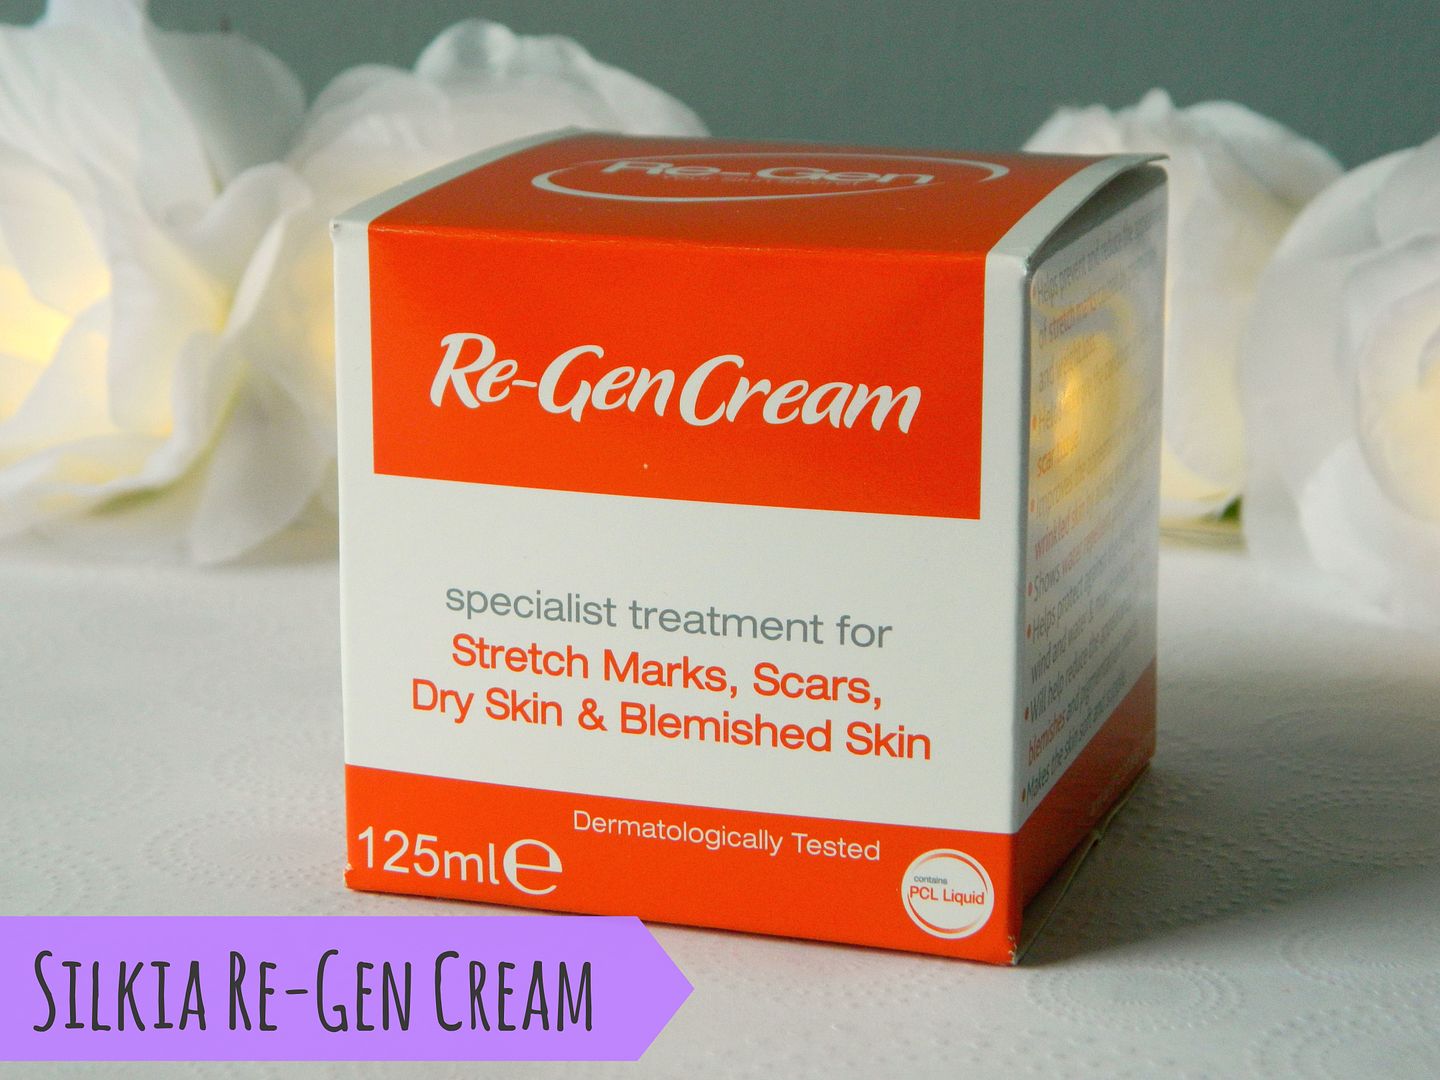 Silkia Re-Gen Cream Review Belle-amie